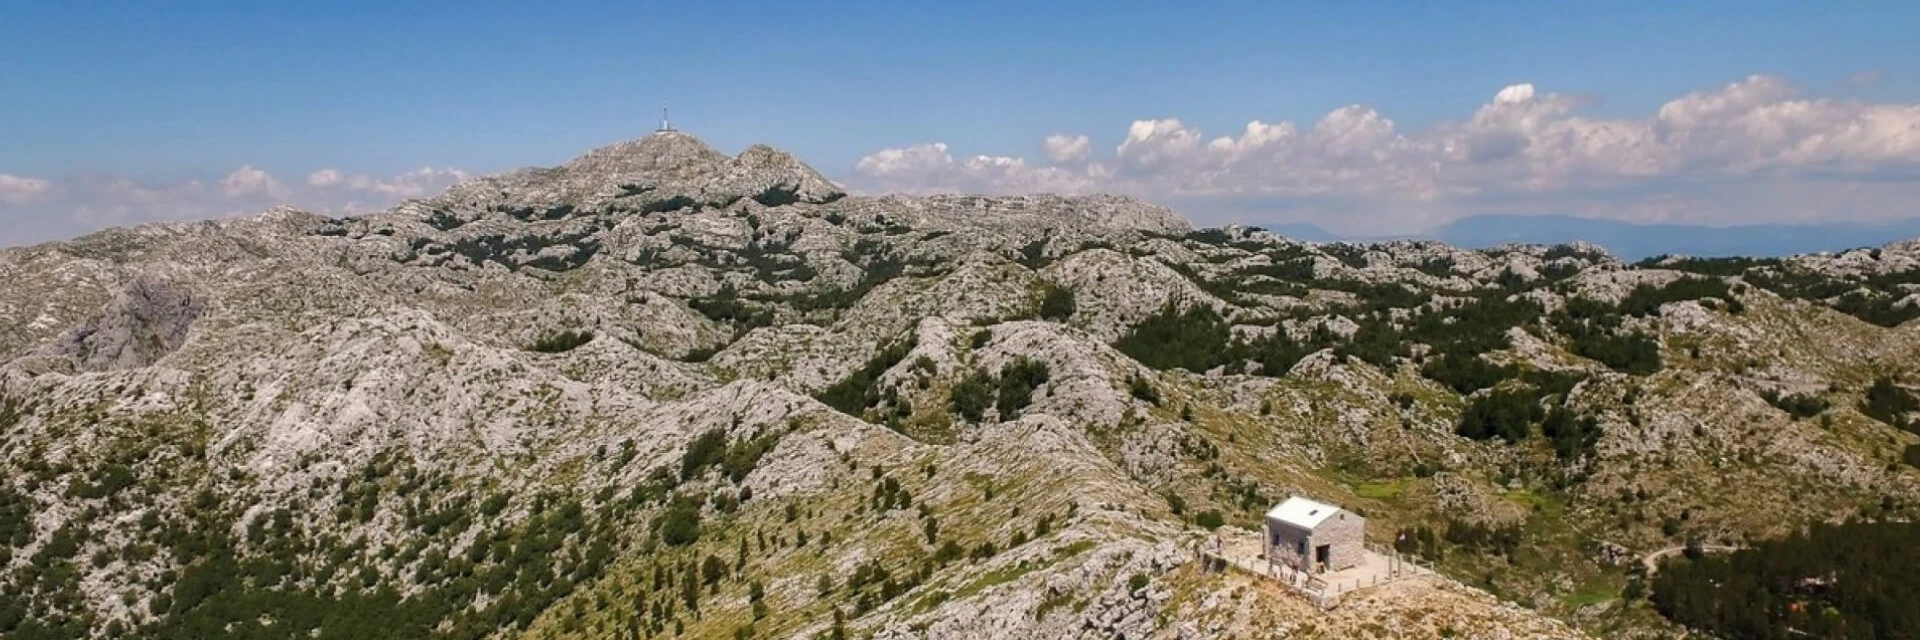 Start Your Croatian Hiking Adventure in Podgora near Makarska